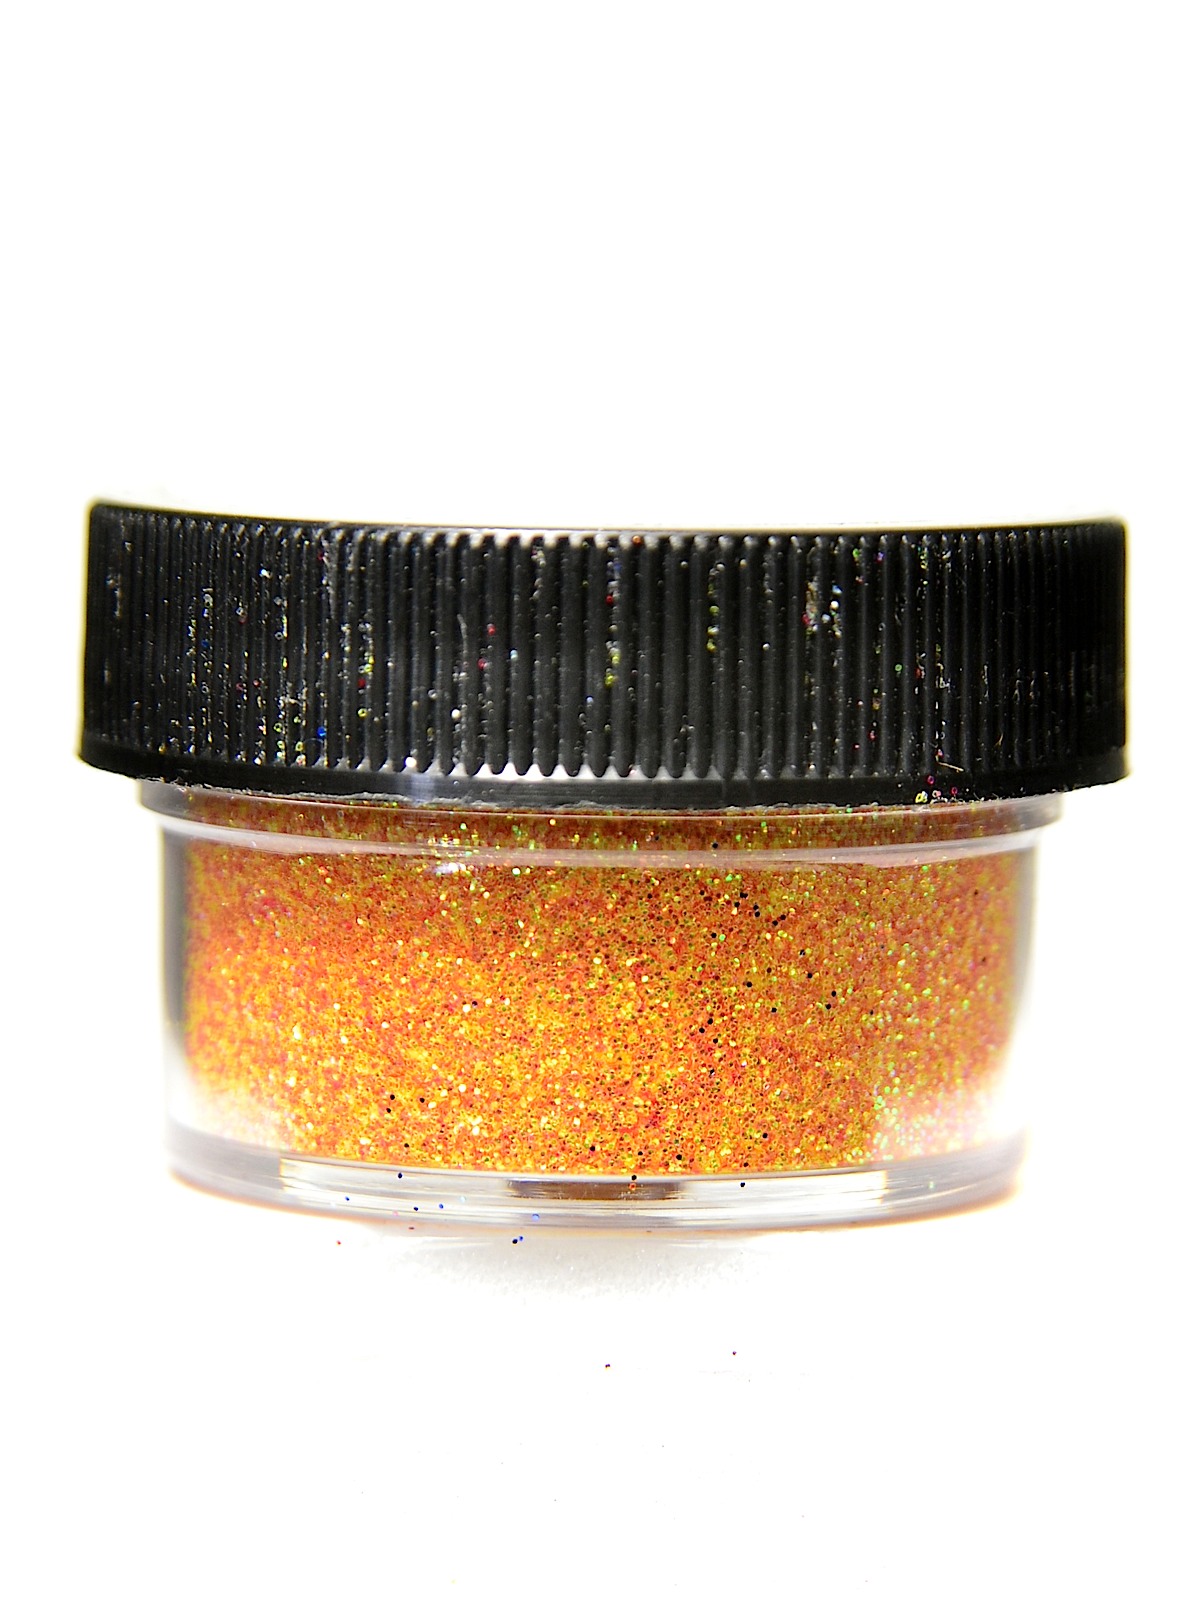 Ultrafine Transparent Glitter Orange Crush 1 2 Oz. Jar